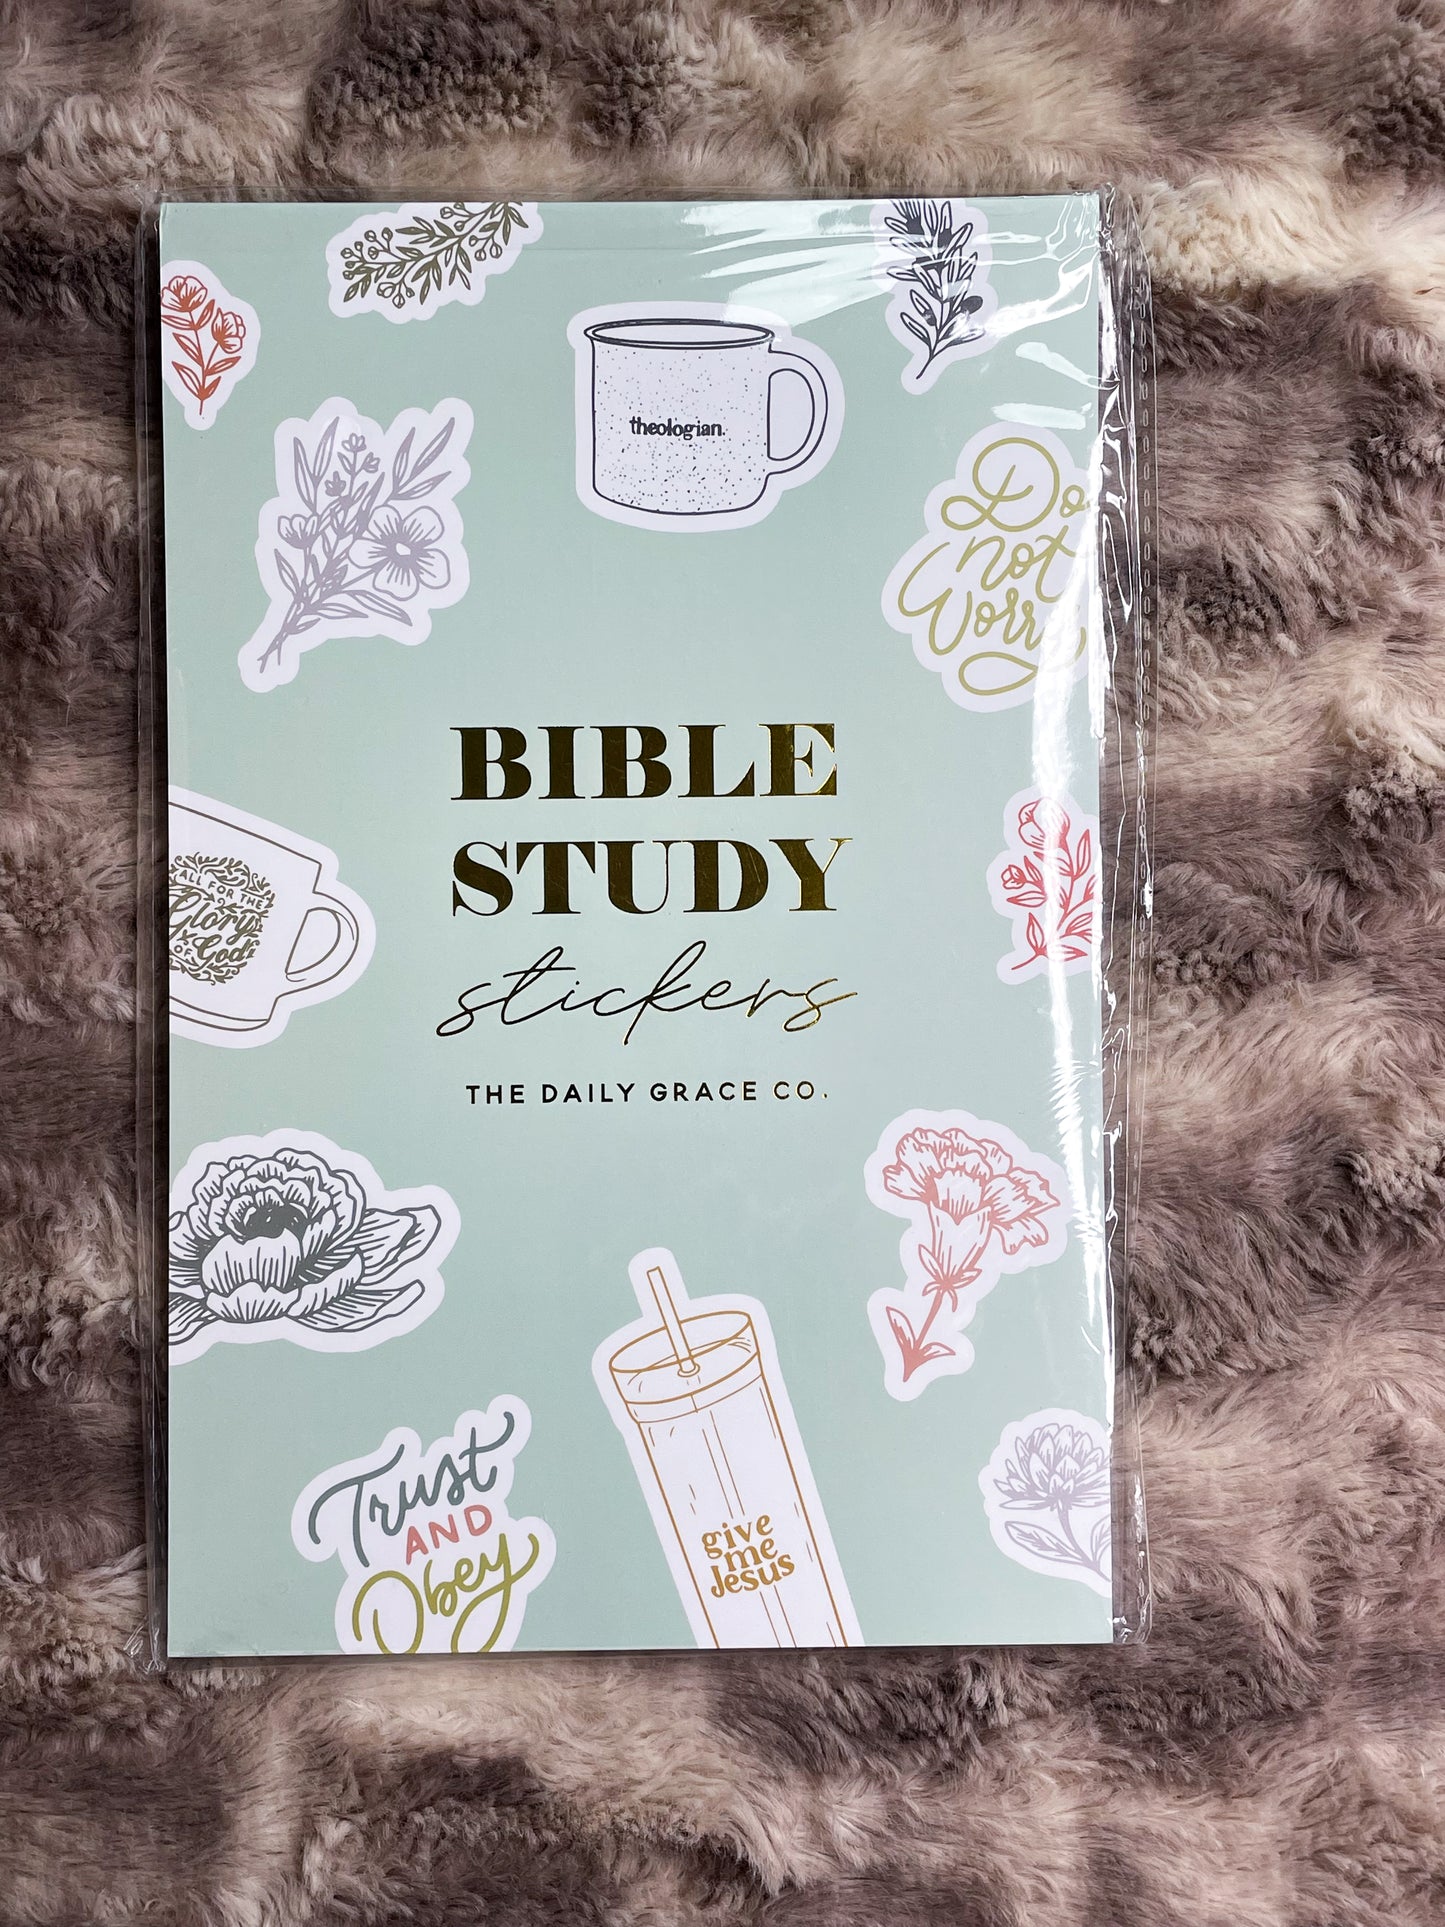 Bible study stickers